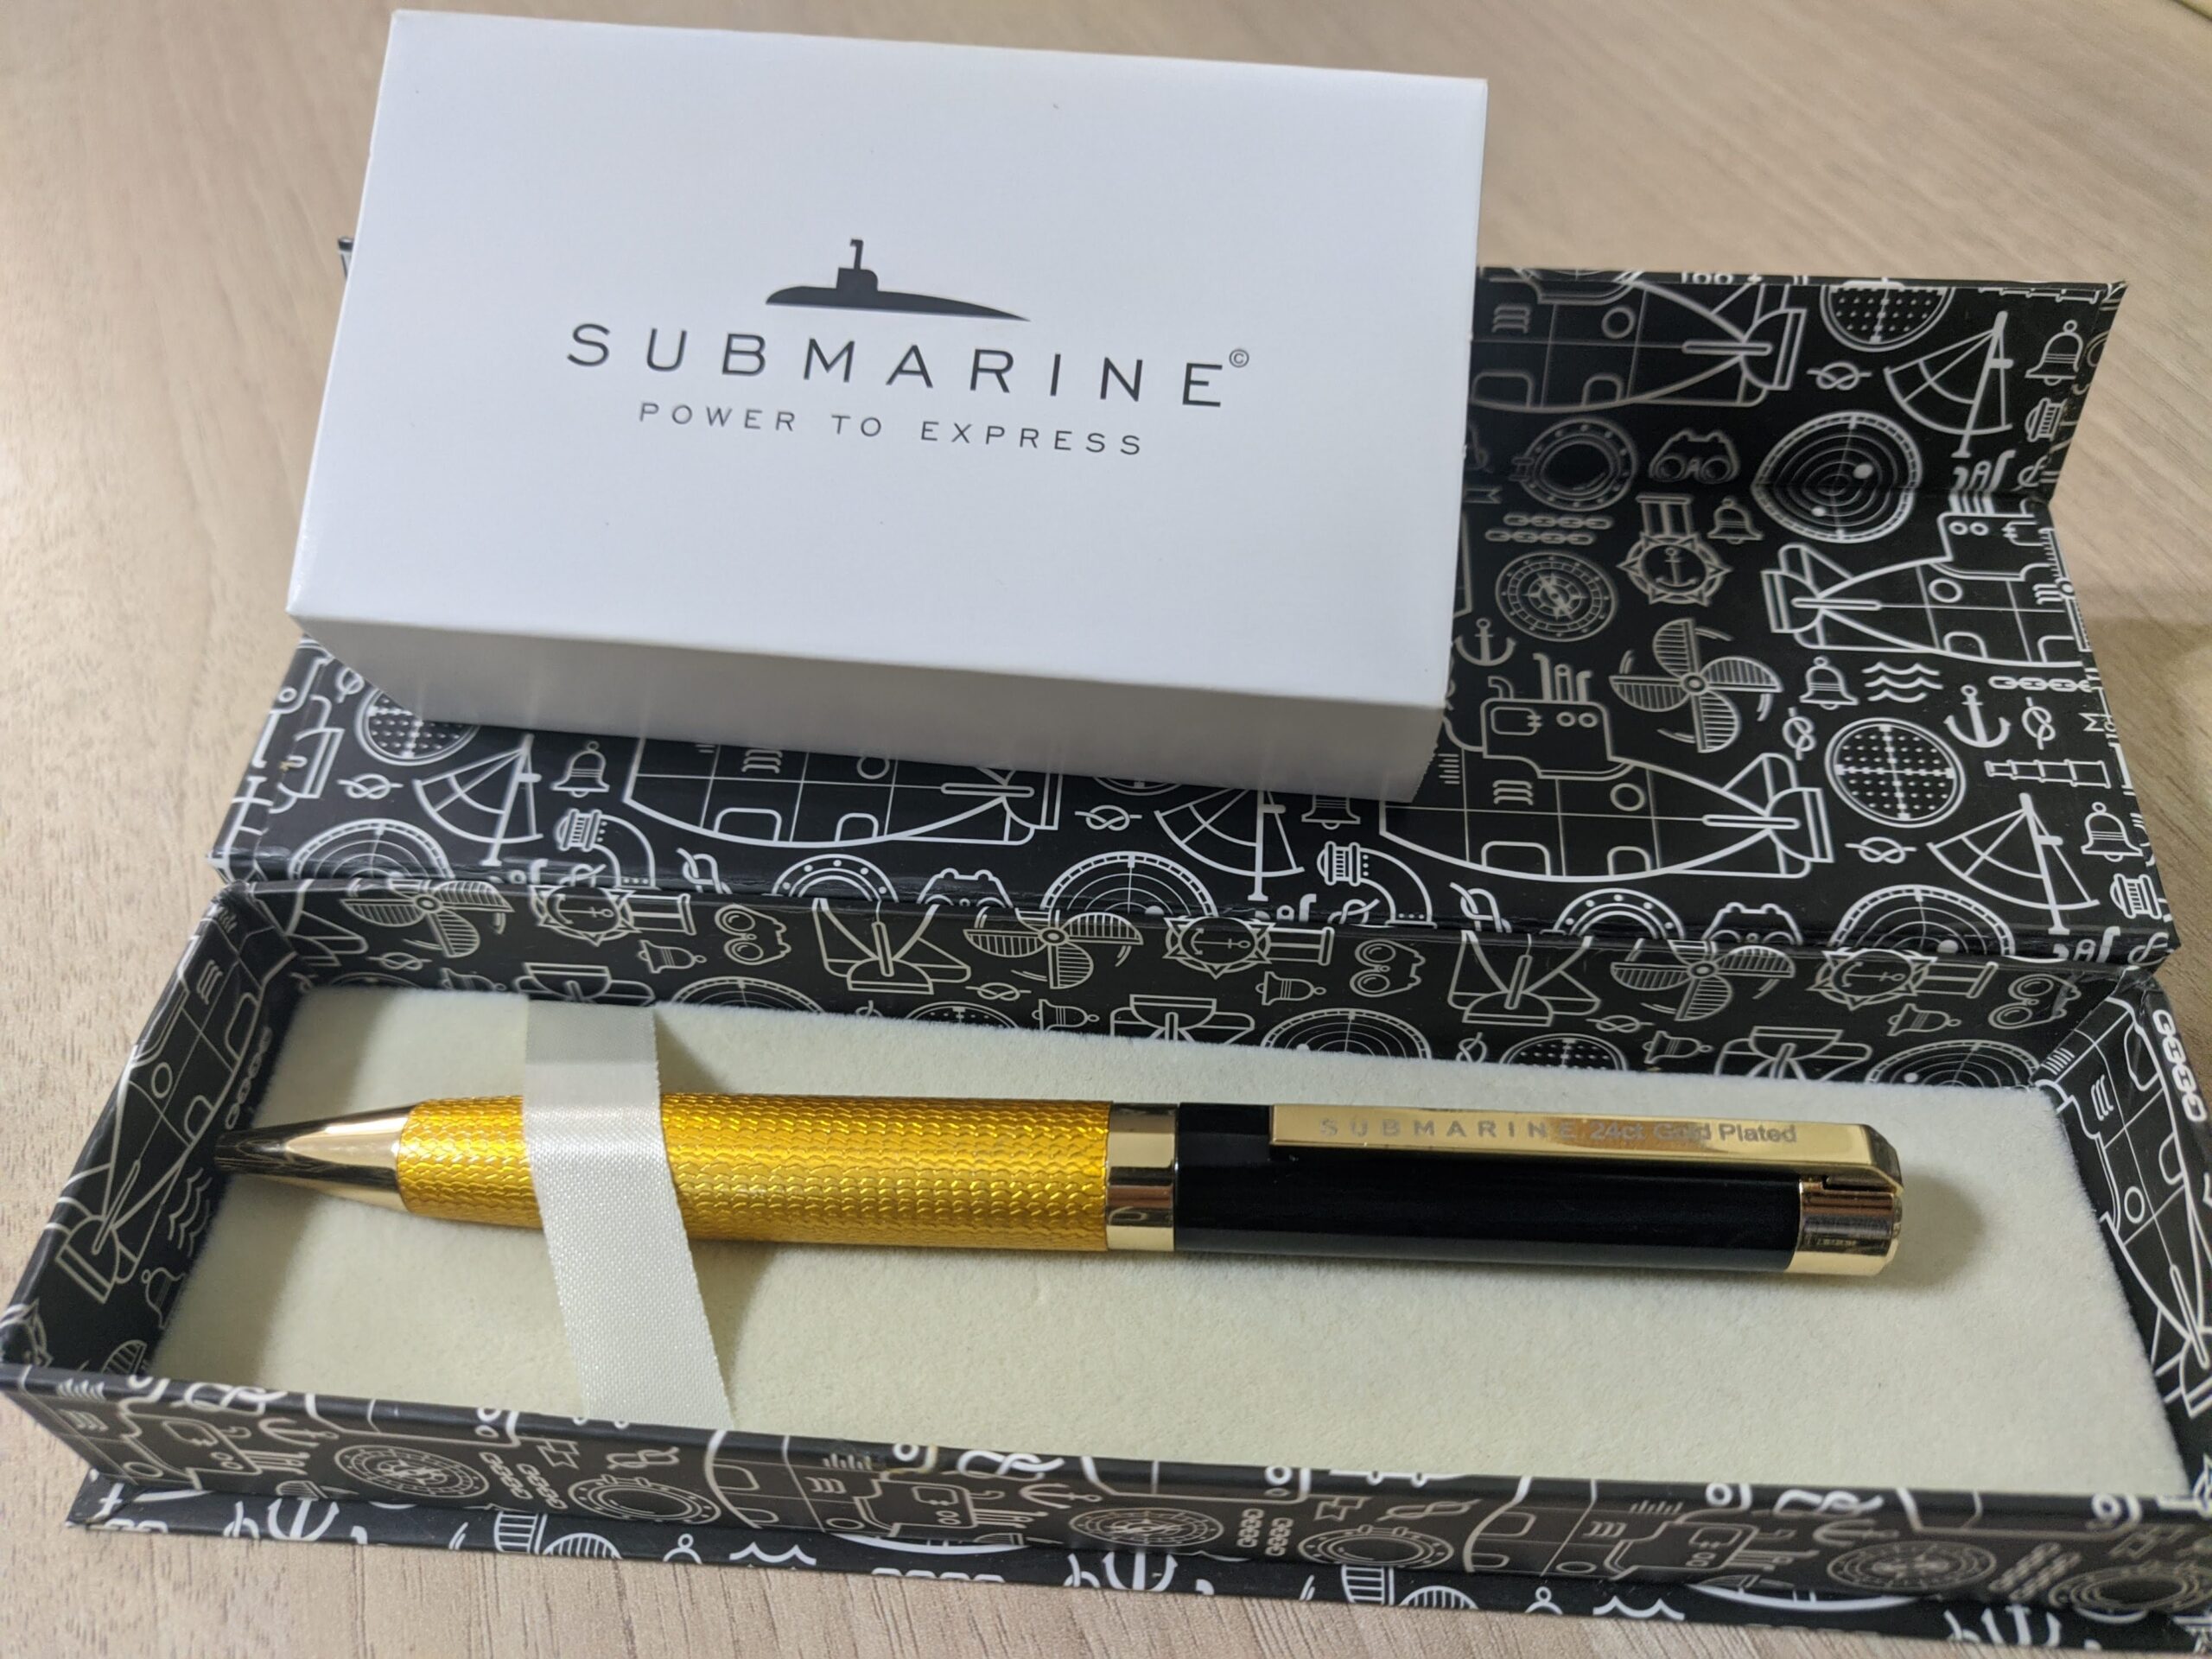 Submarine 24 Carat Gold Set - The Formal Looking Pen - HorizonTechnical